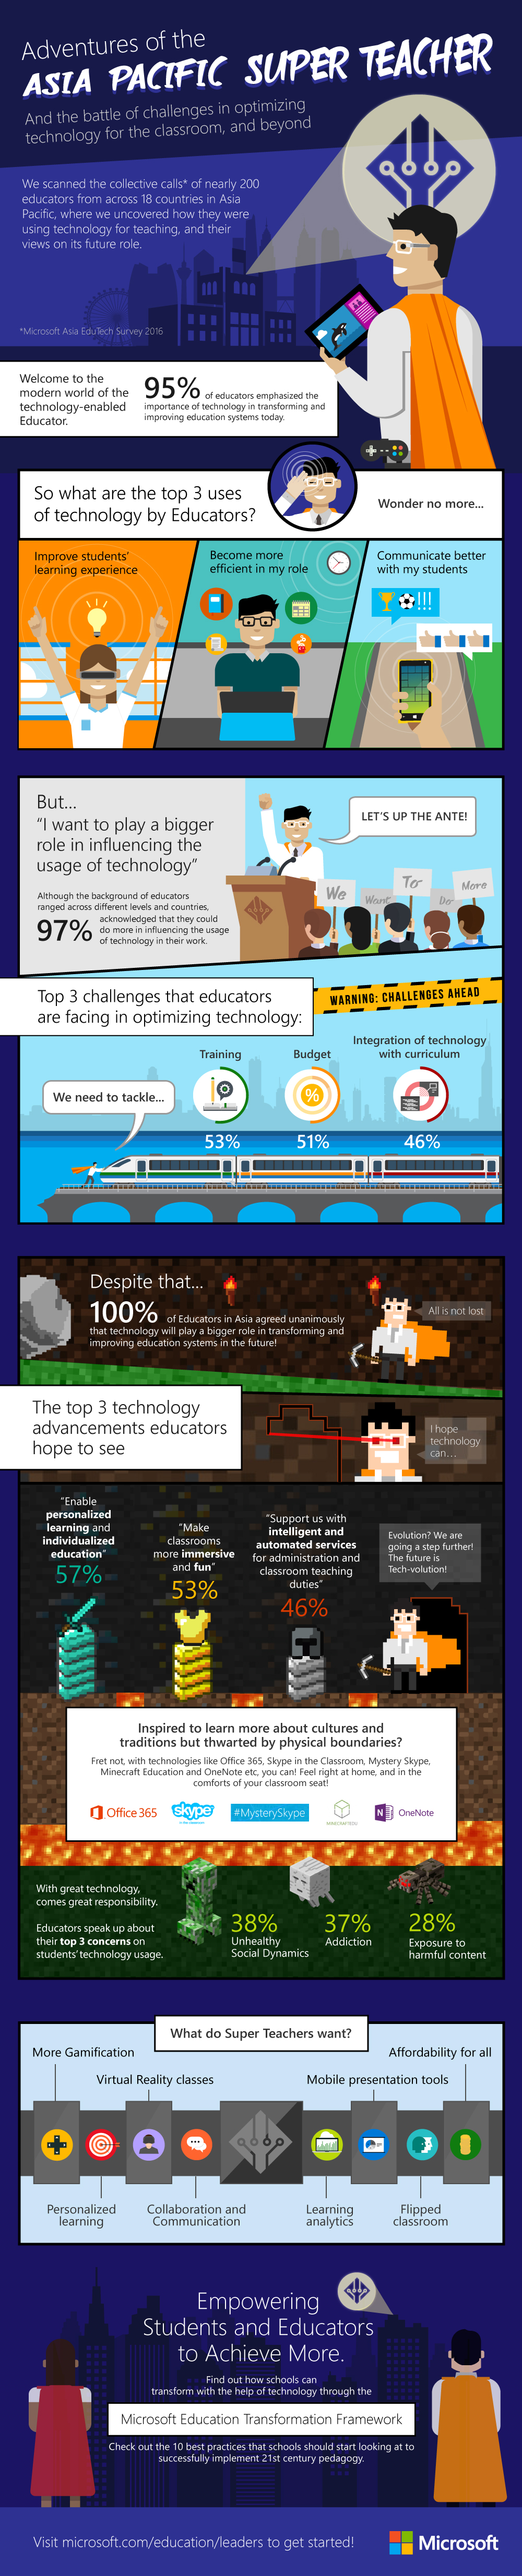 Microsoft Asia EduTech Survey 2016 - Infographic